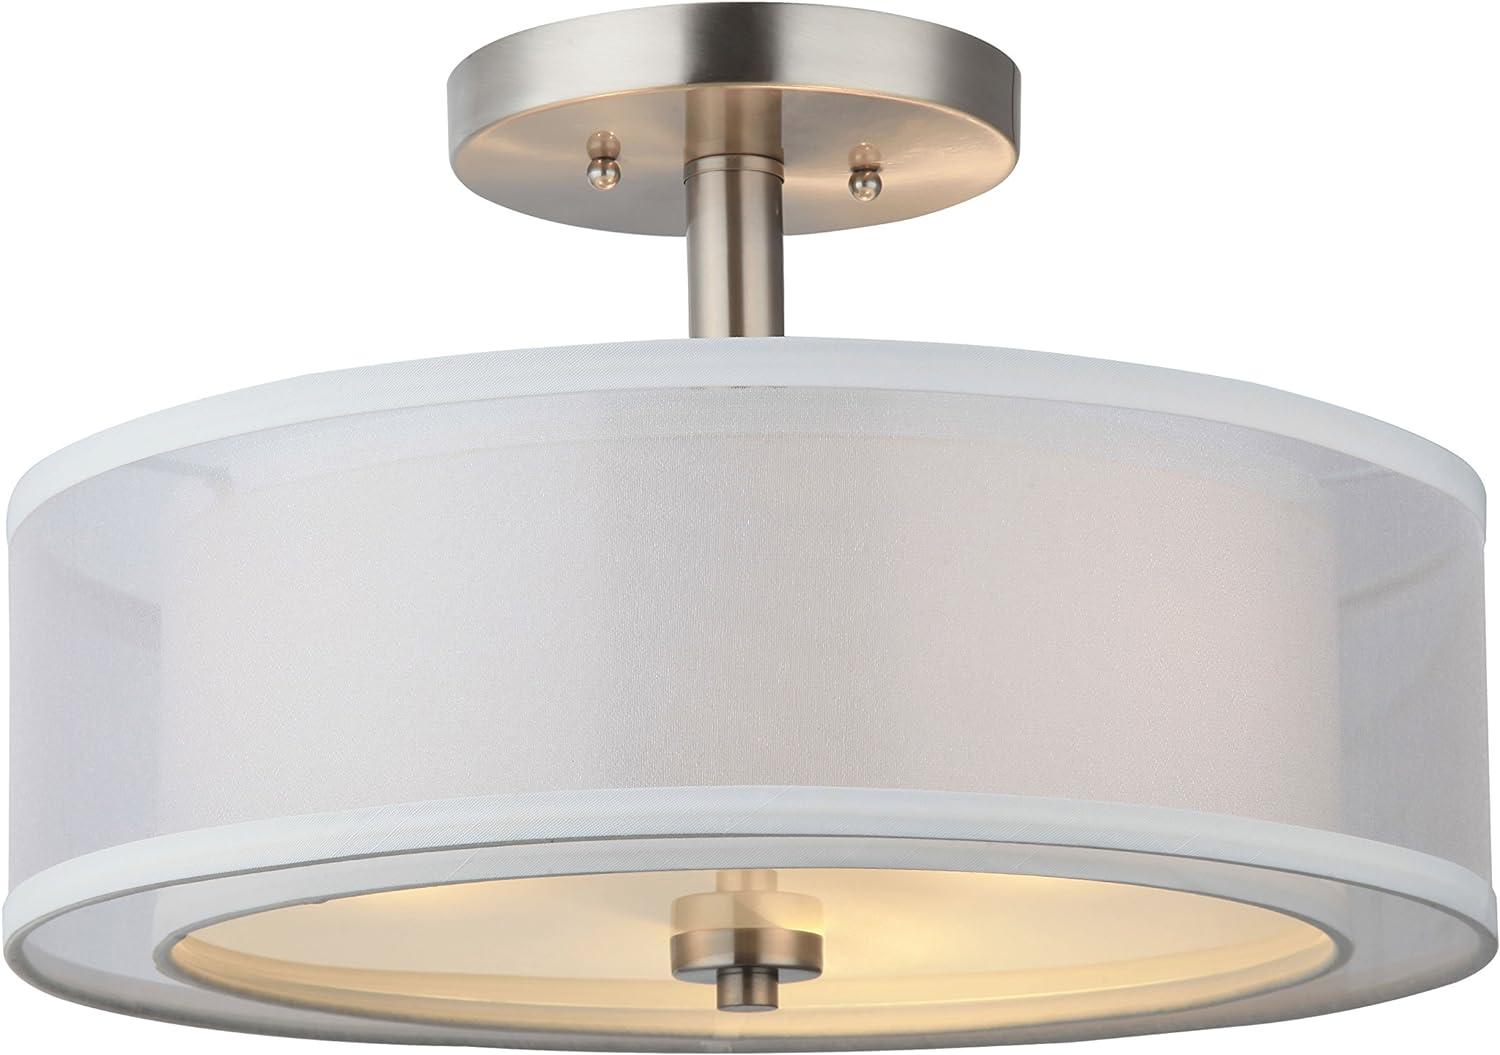 Elegant Satin Nickel 3-Light Semi-Flush Ceiling Fixture with White Glass Shade